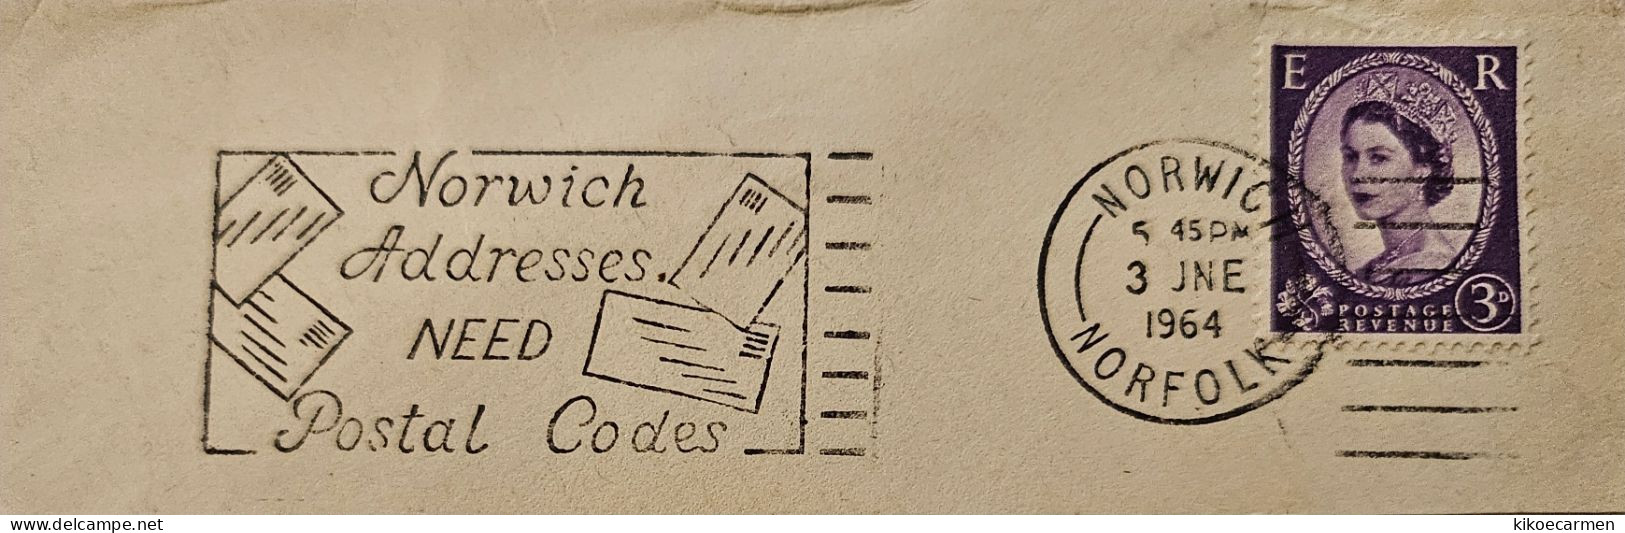 ZIP CODE Postal Code History Of Post Cancel Cancellation Postmark - Postcode